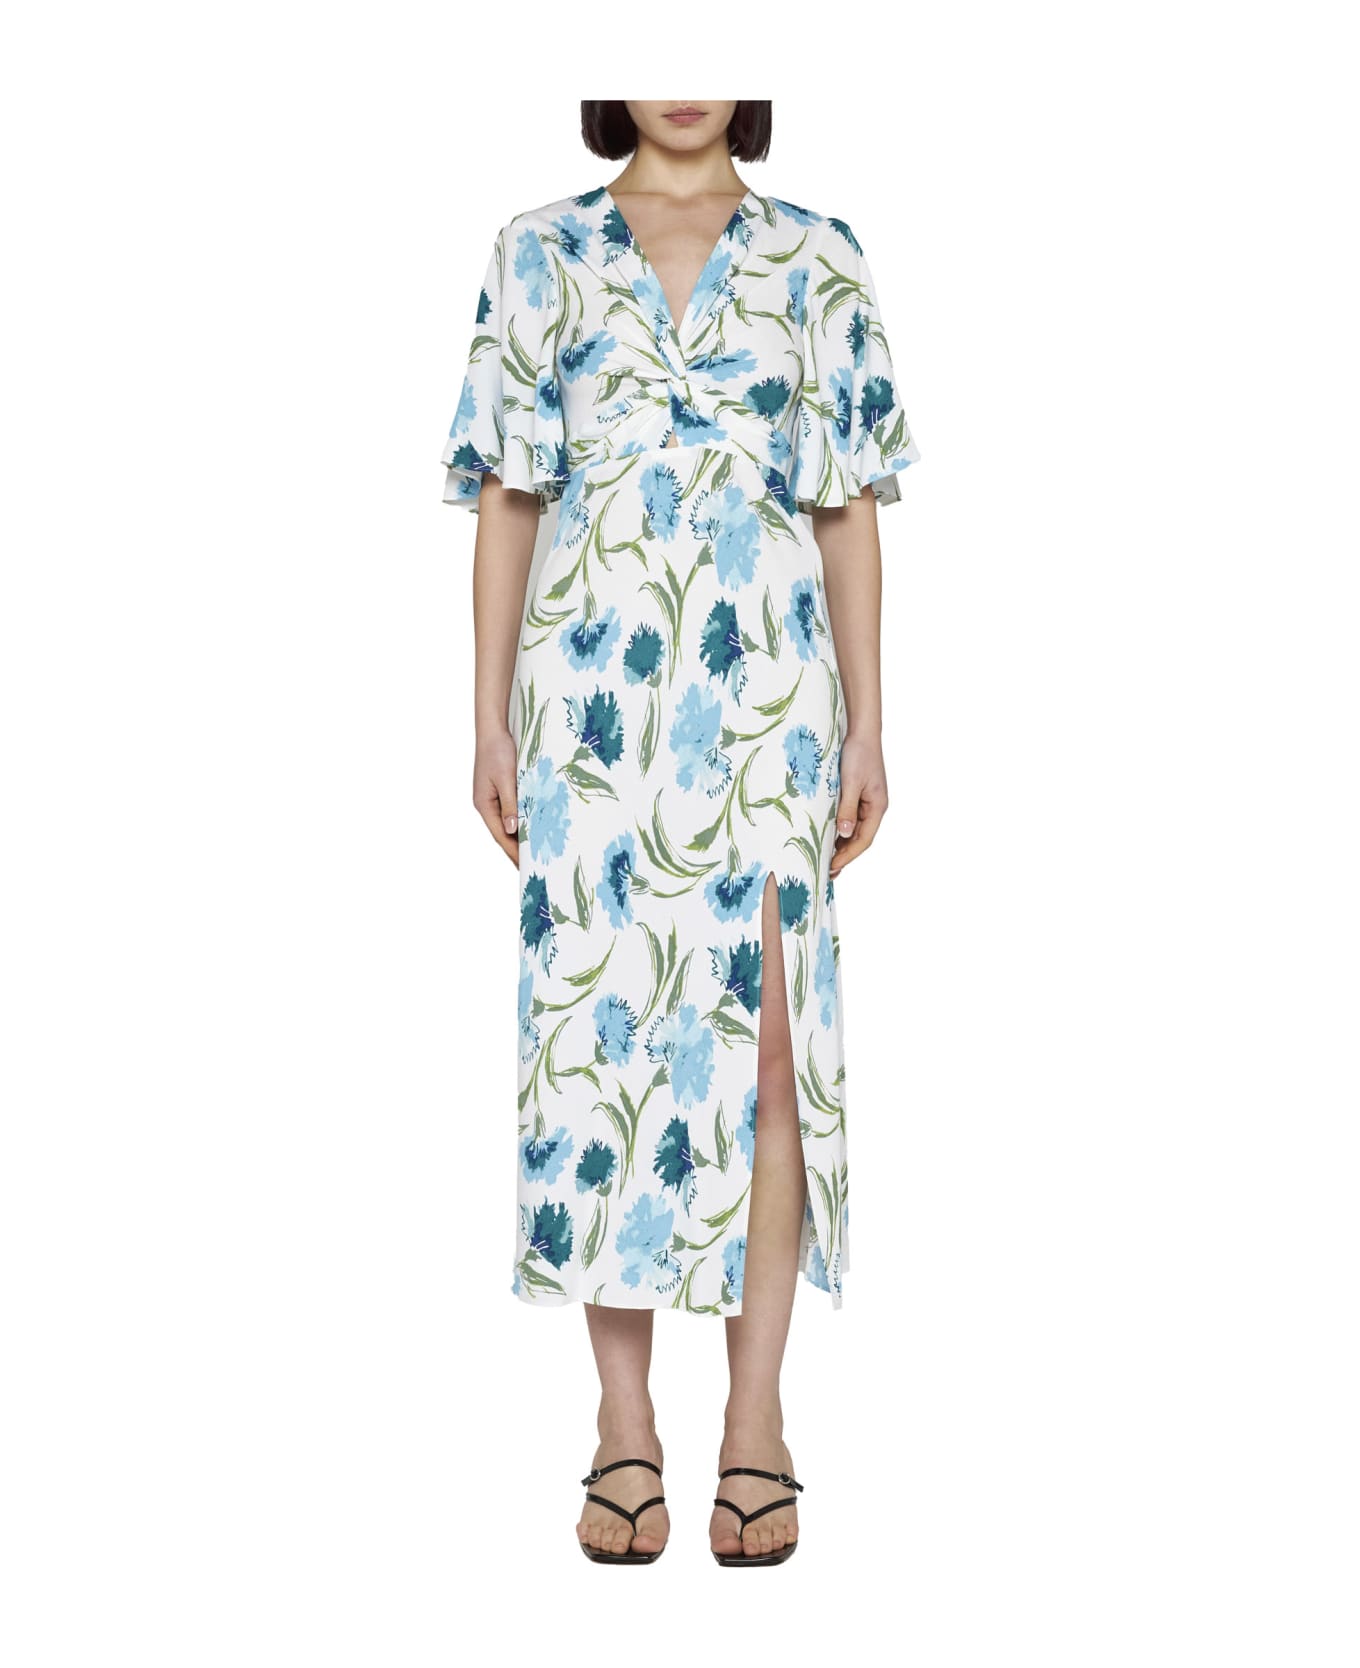 Diane Von Furstenberg Dress - Dianthus large lg blue